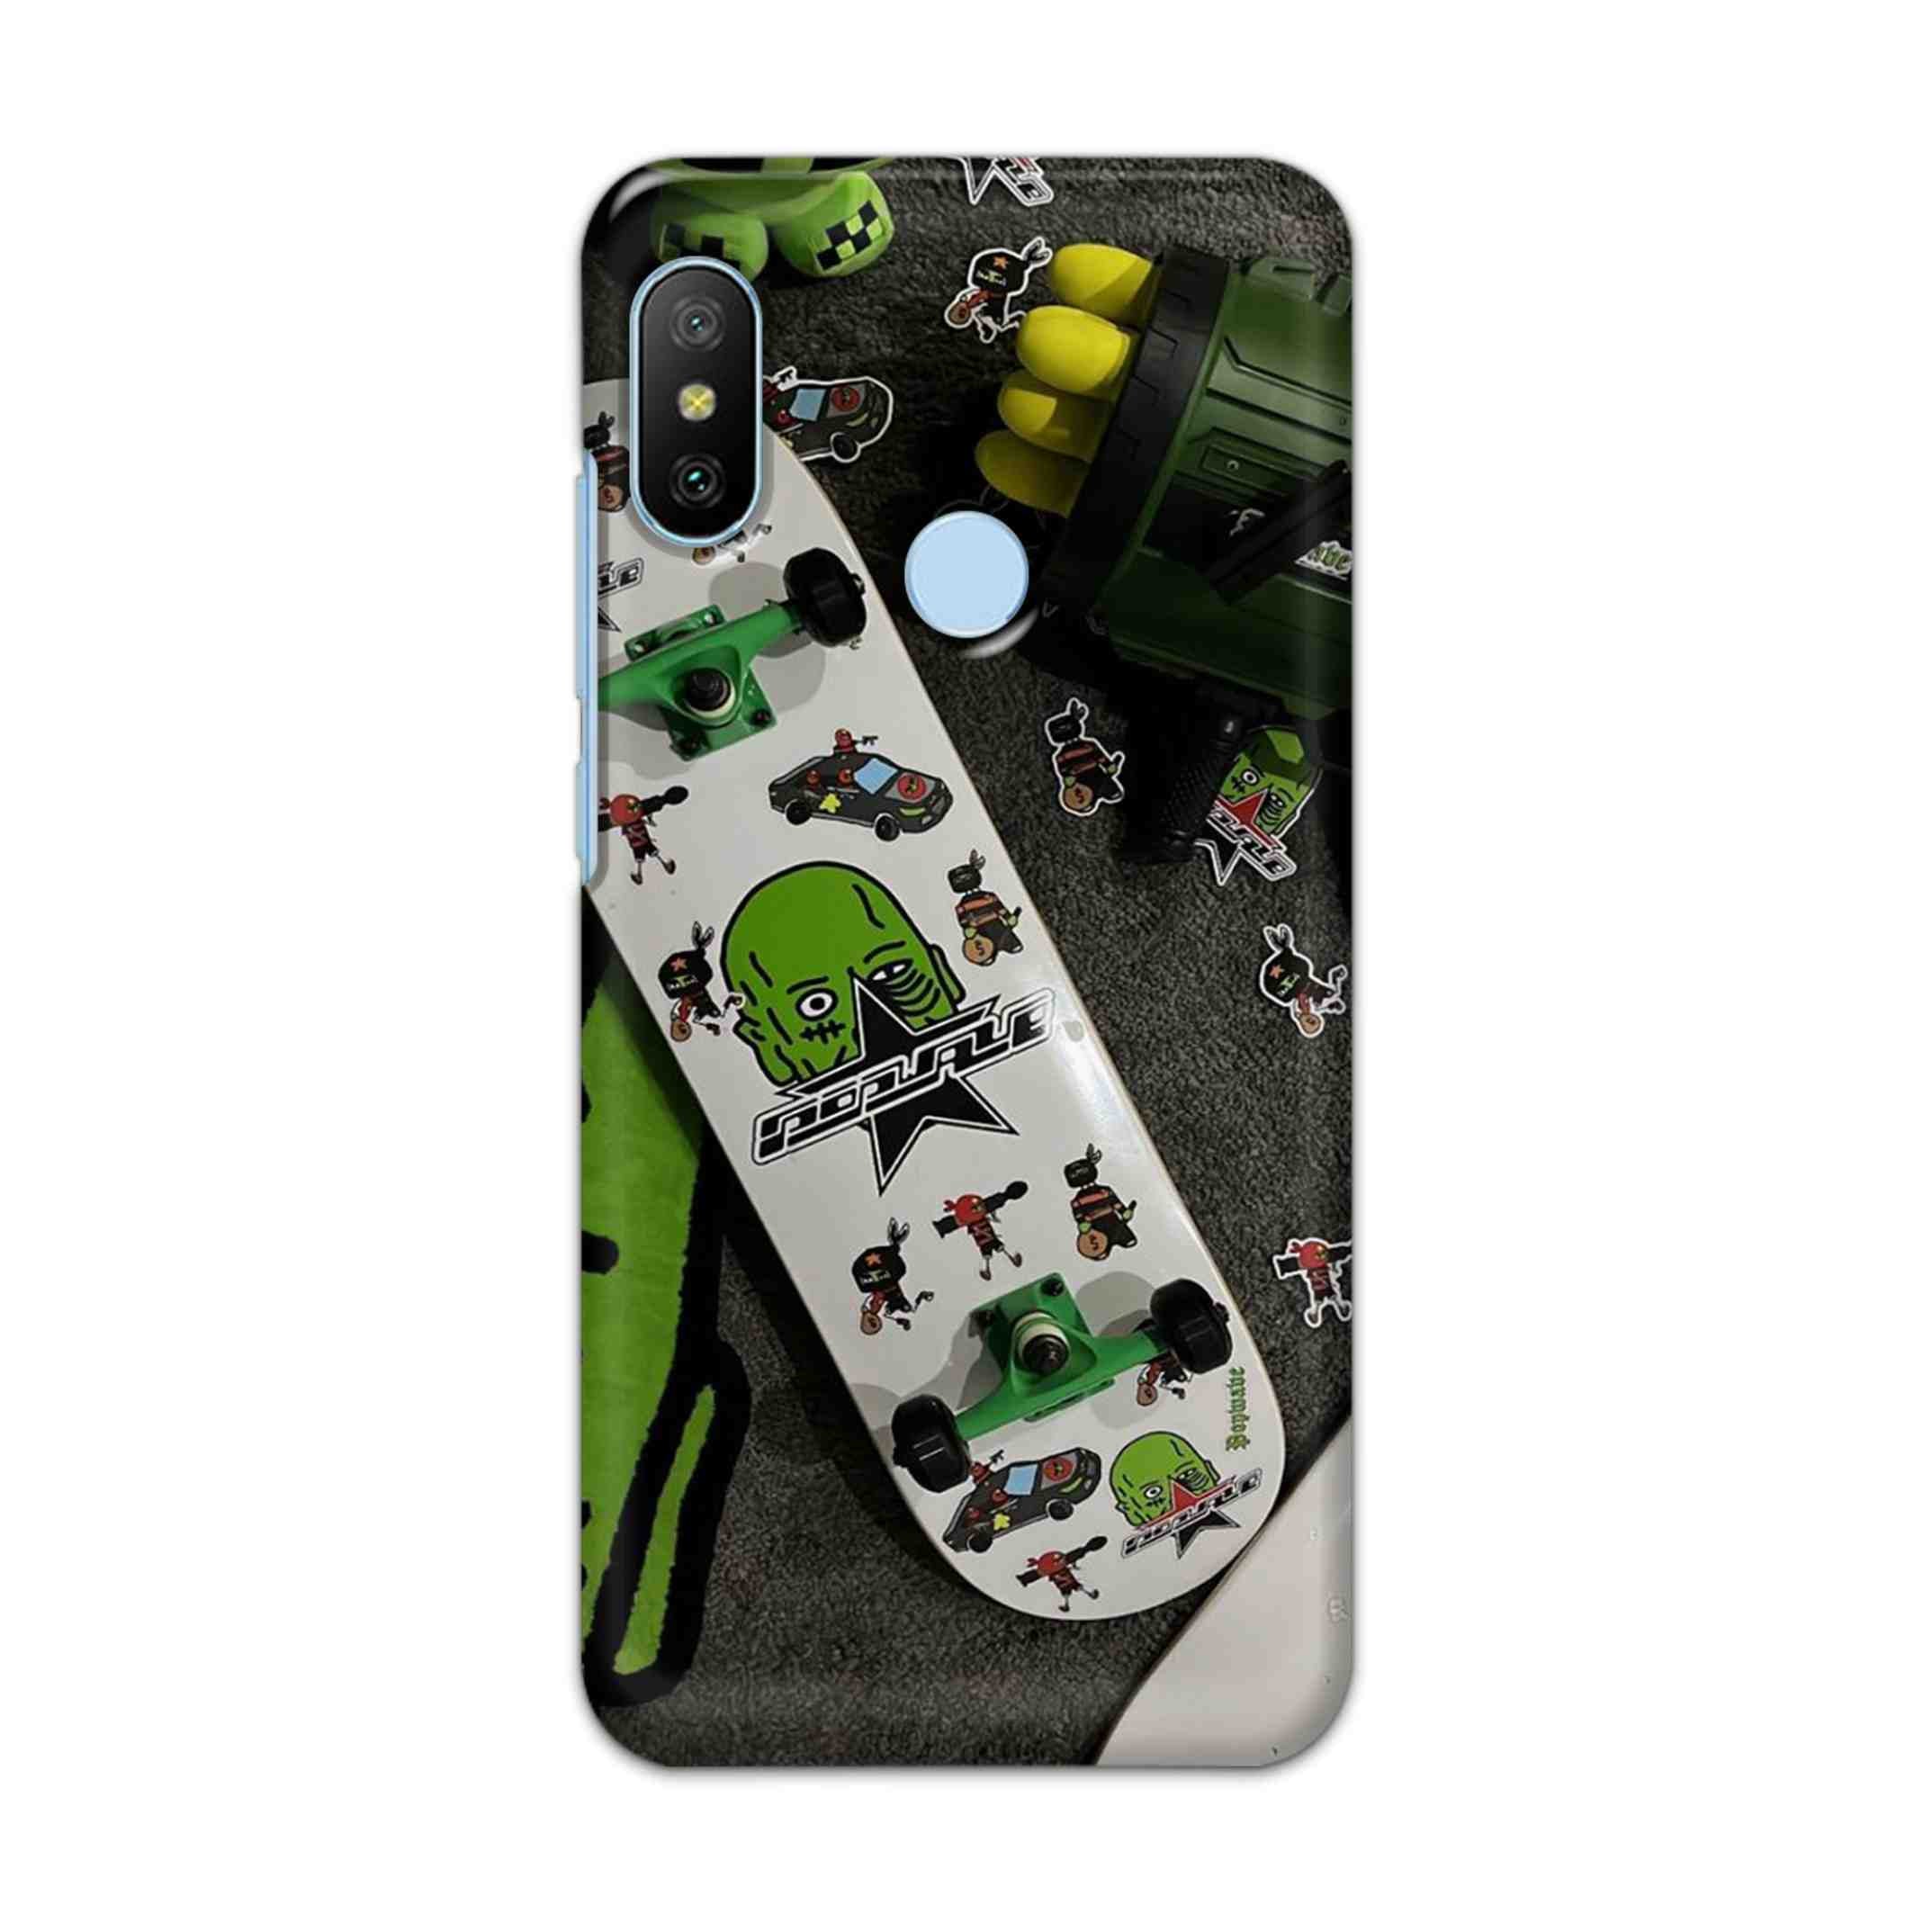 Buy Hulk Skateboard Hard Back Mobile Phone Case/Cover For Xiaomi Redmi 6 Pro Online